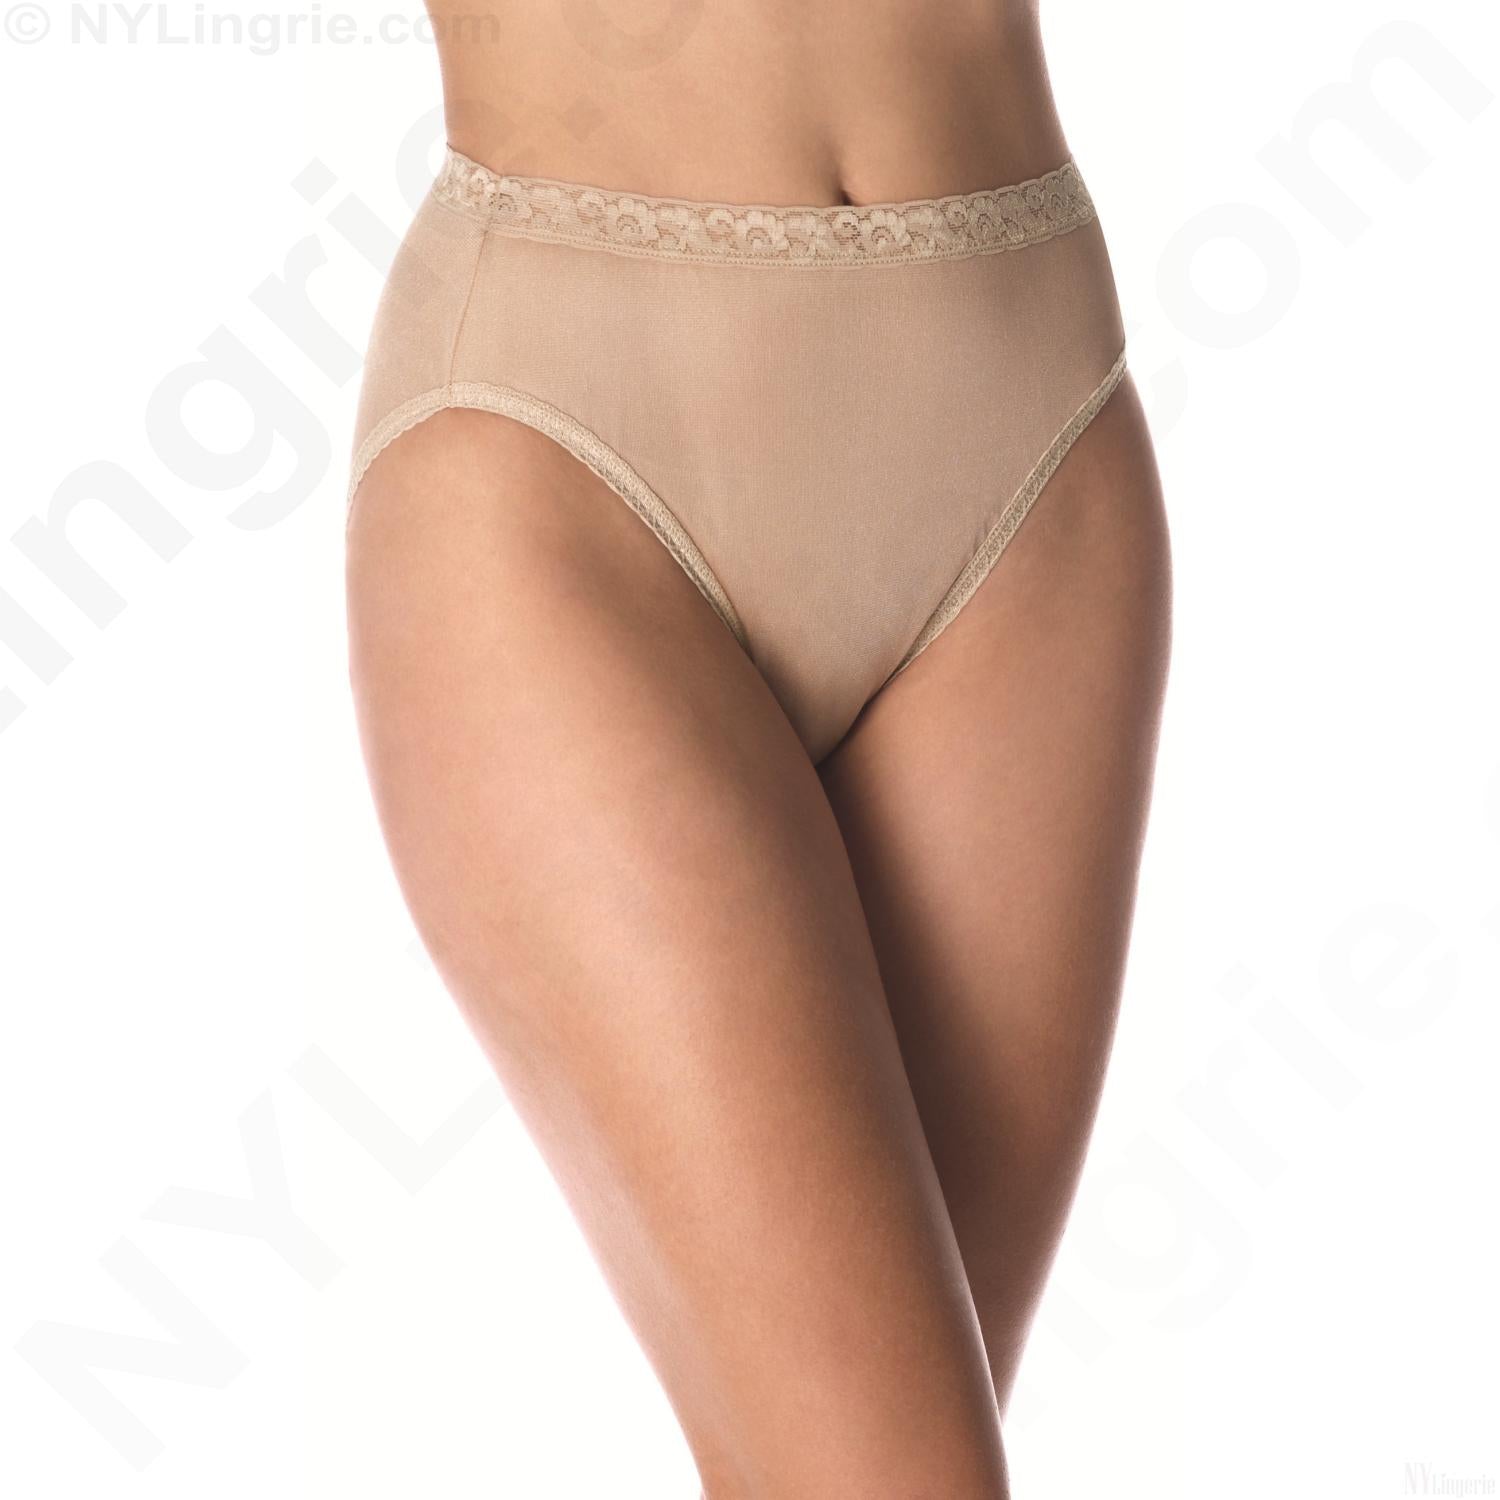 Hanes Women's Nylon Hi-Cut Underwear, 6-Pack